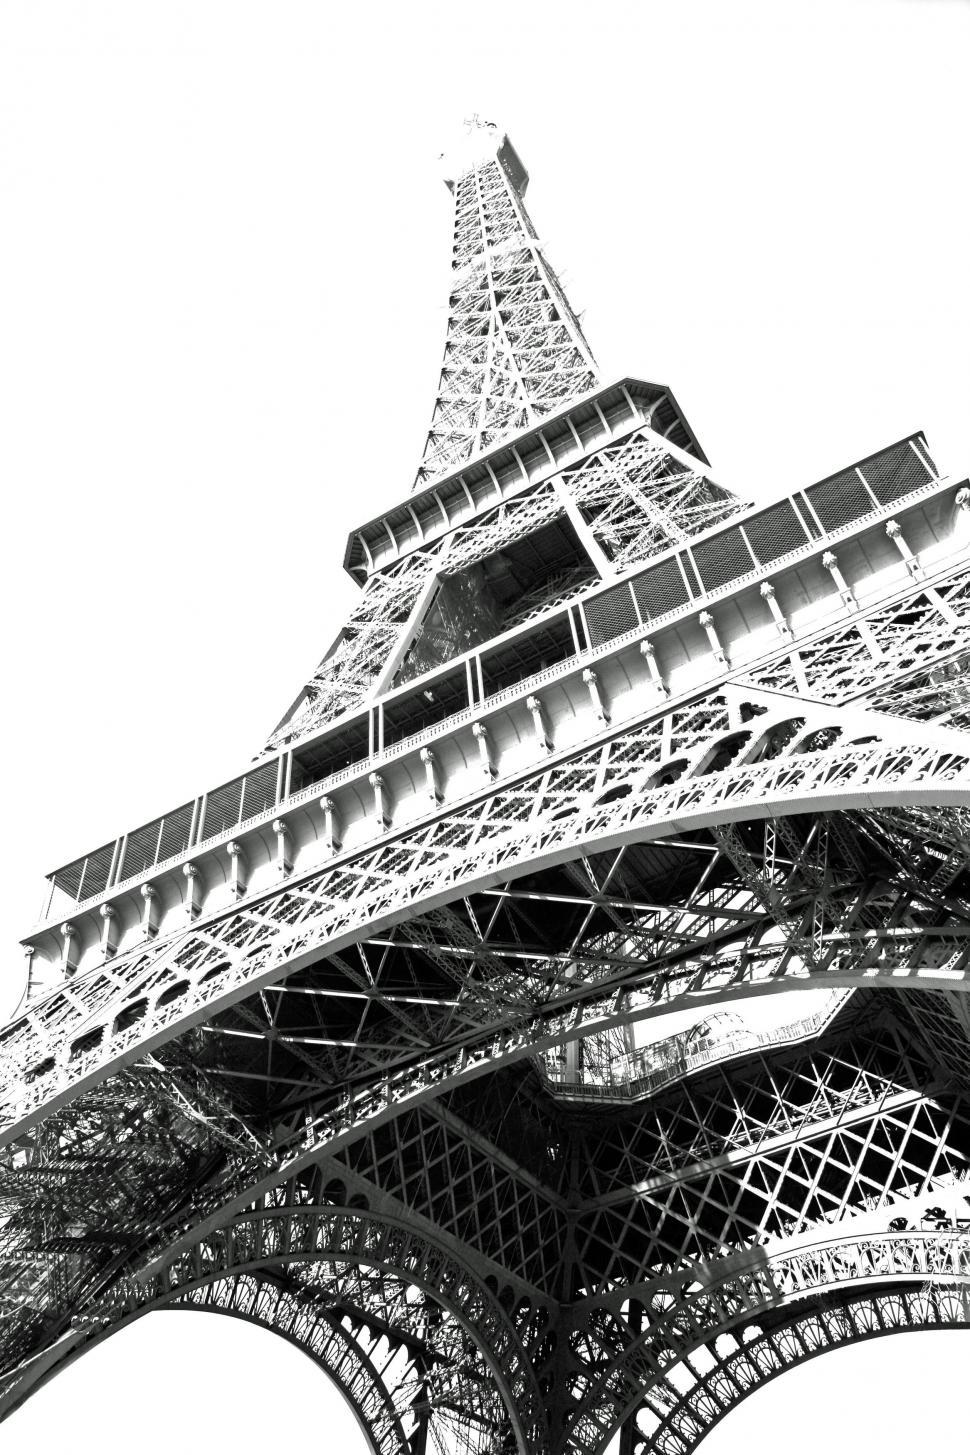 Free Image of Eiffel Tower - B&W 